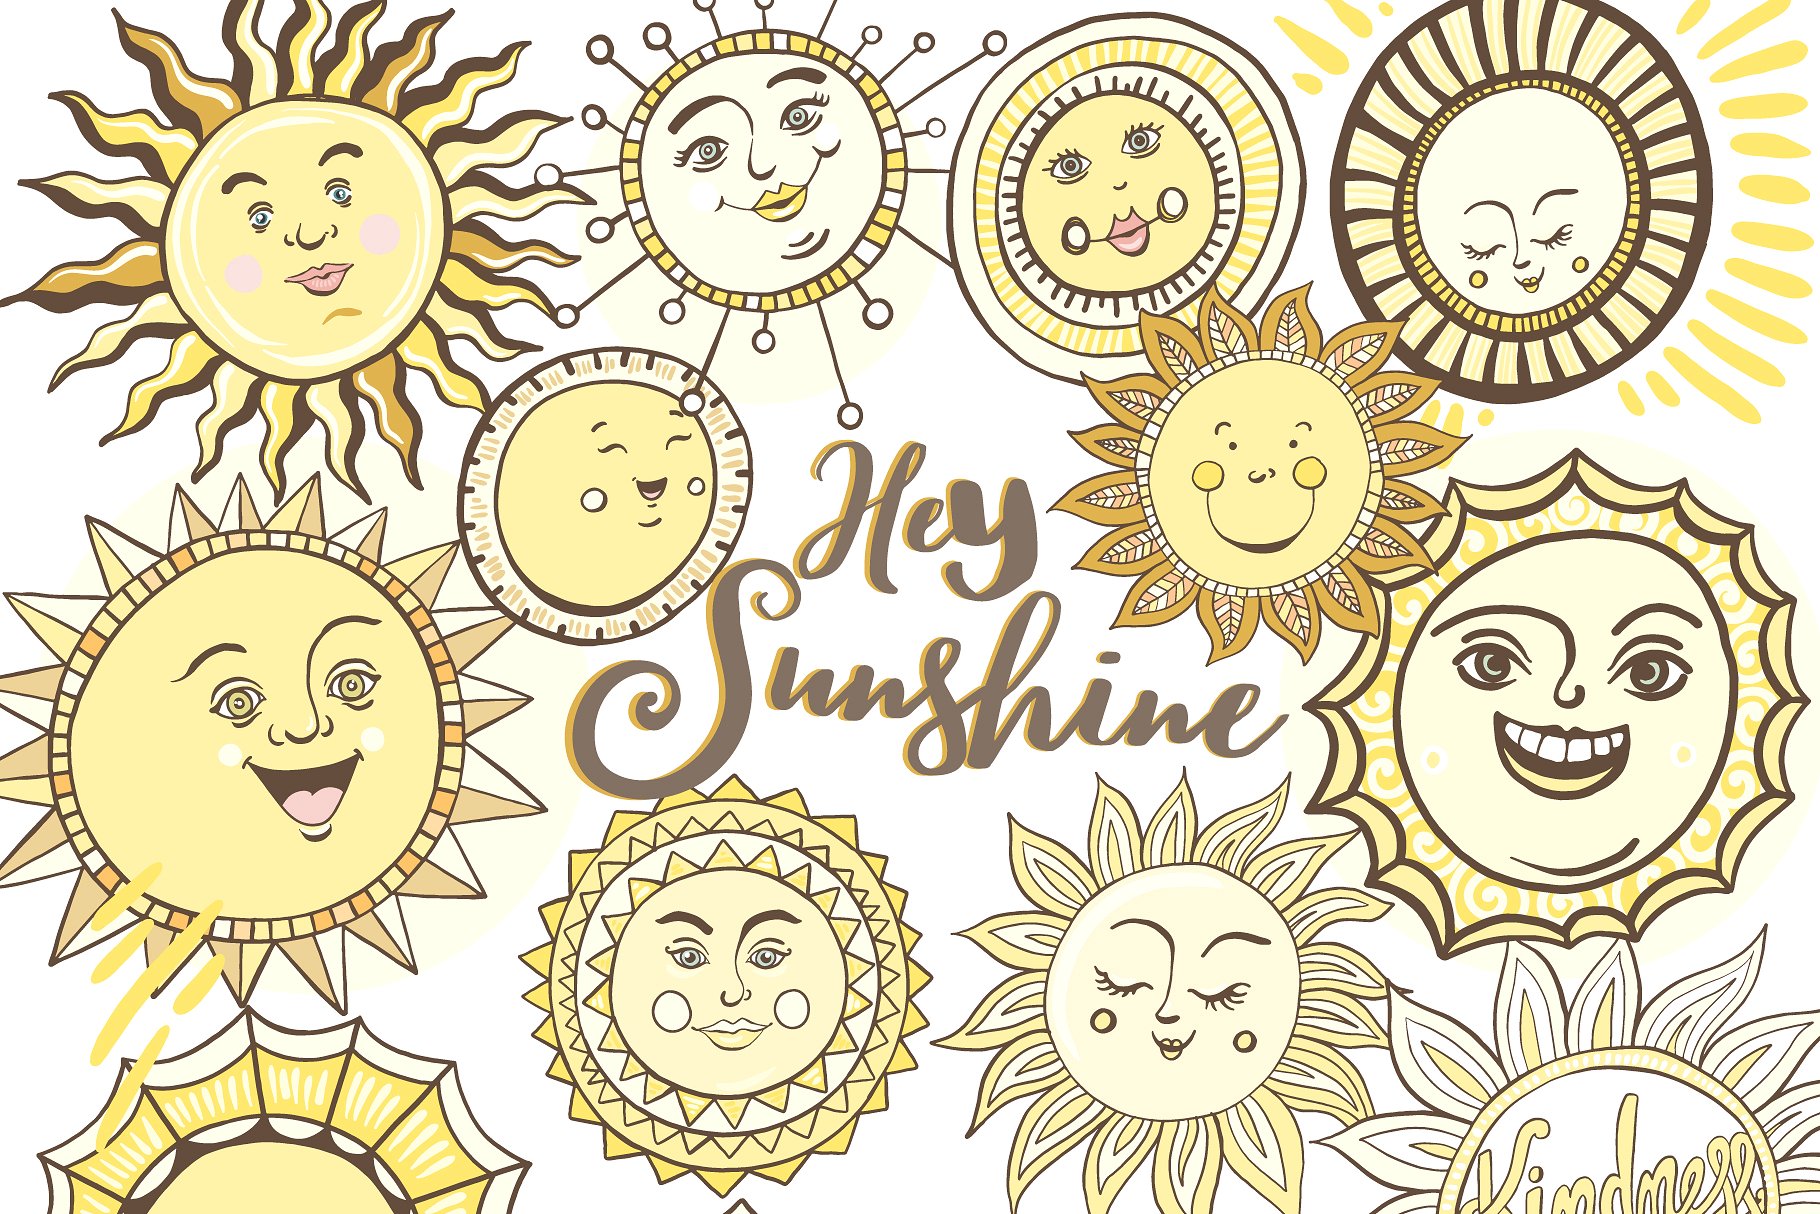 夏季太阳主题人物笑脸插画 Sunshine Face Illustrations插图(3)